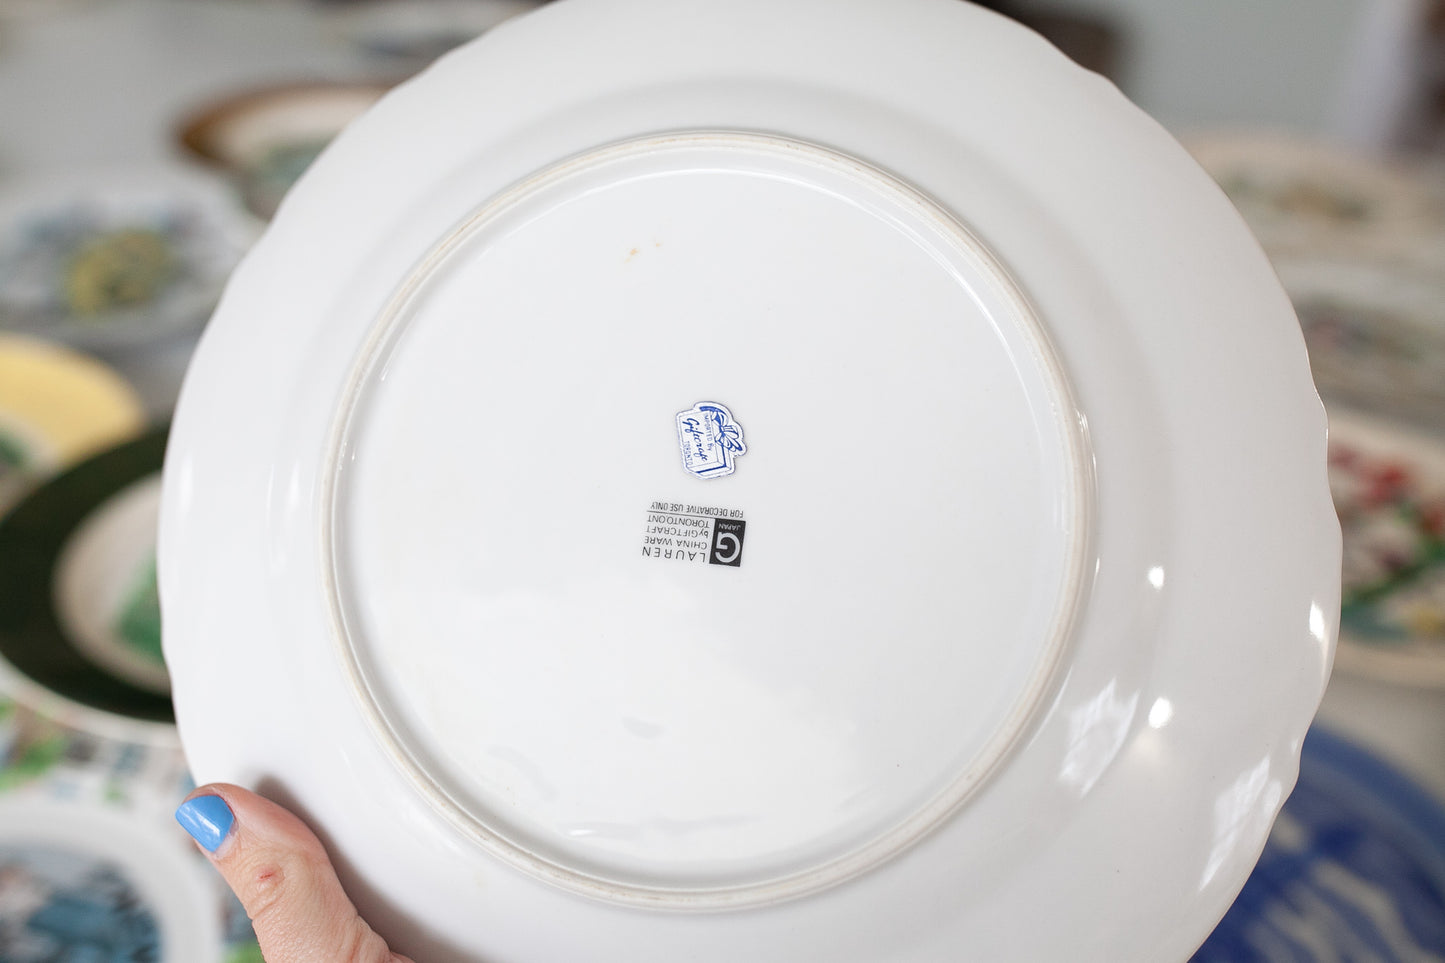 Canada Plate- Tourist Plate - Souvenir Plate